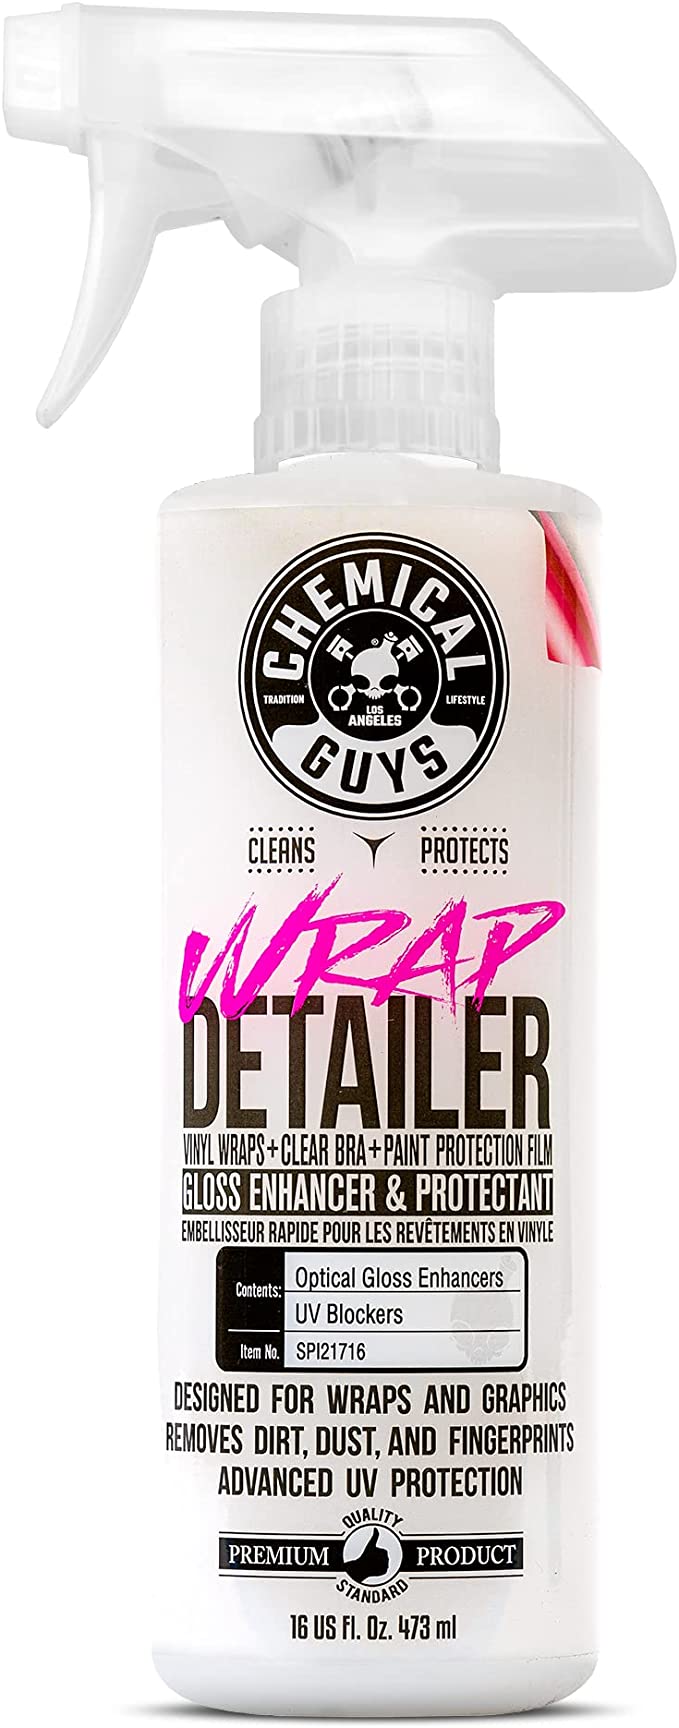 Chemical Guys Wrap Detailer - Designer Wraps